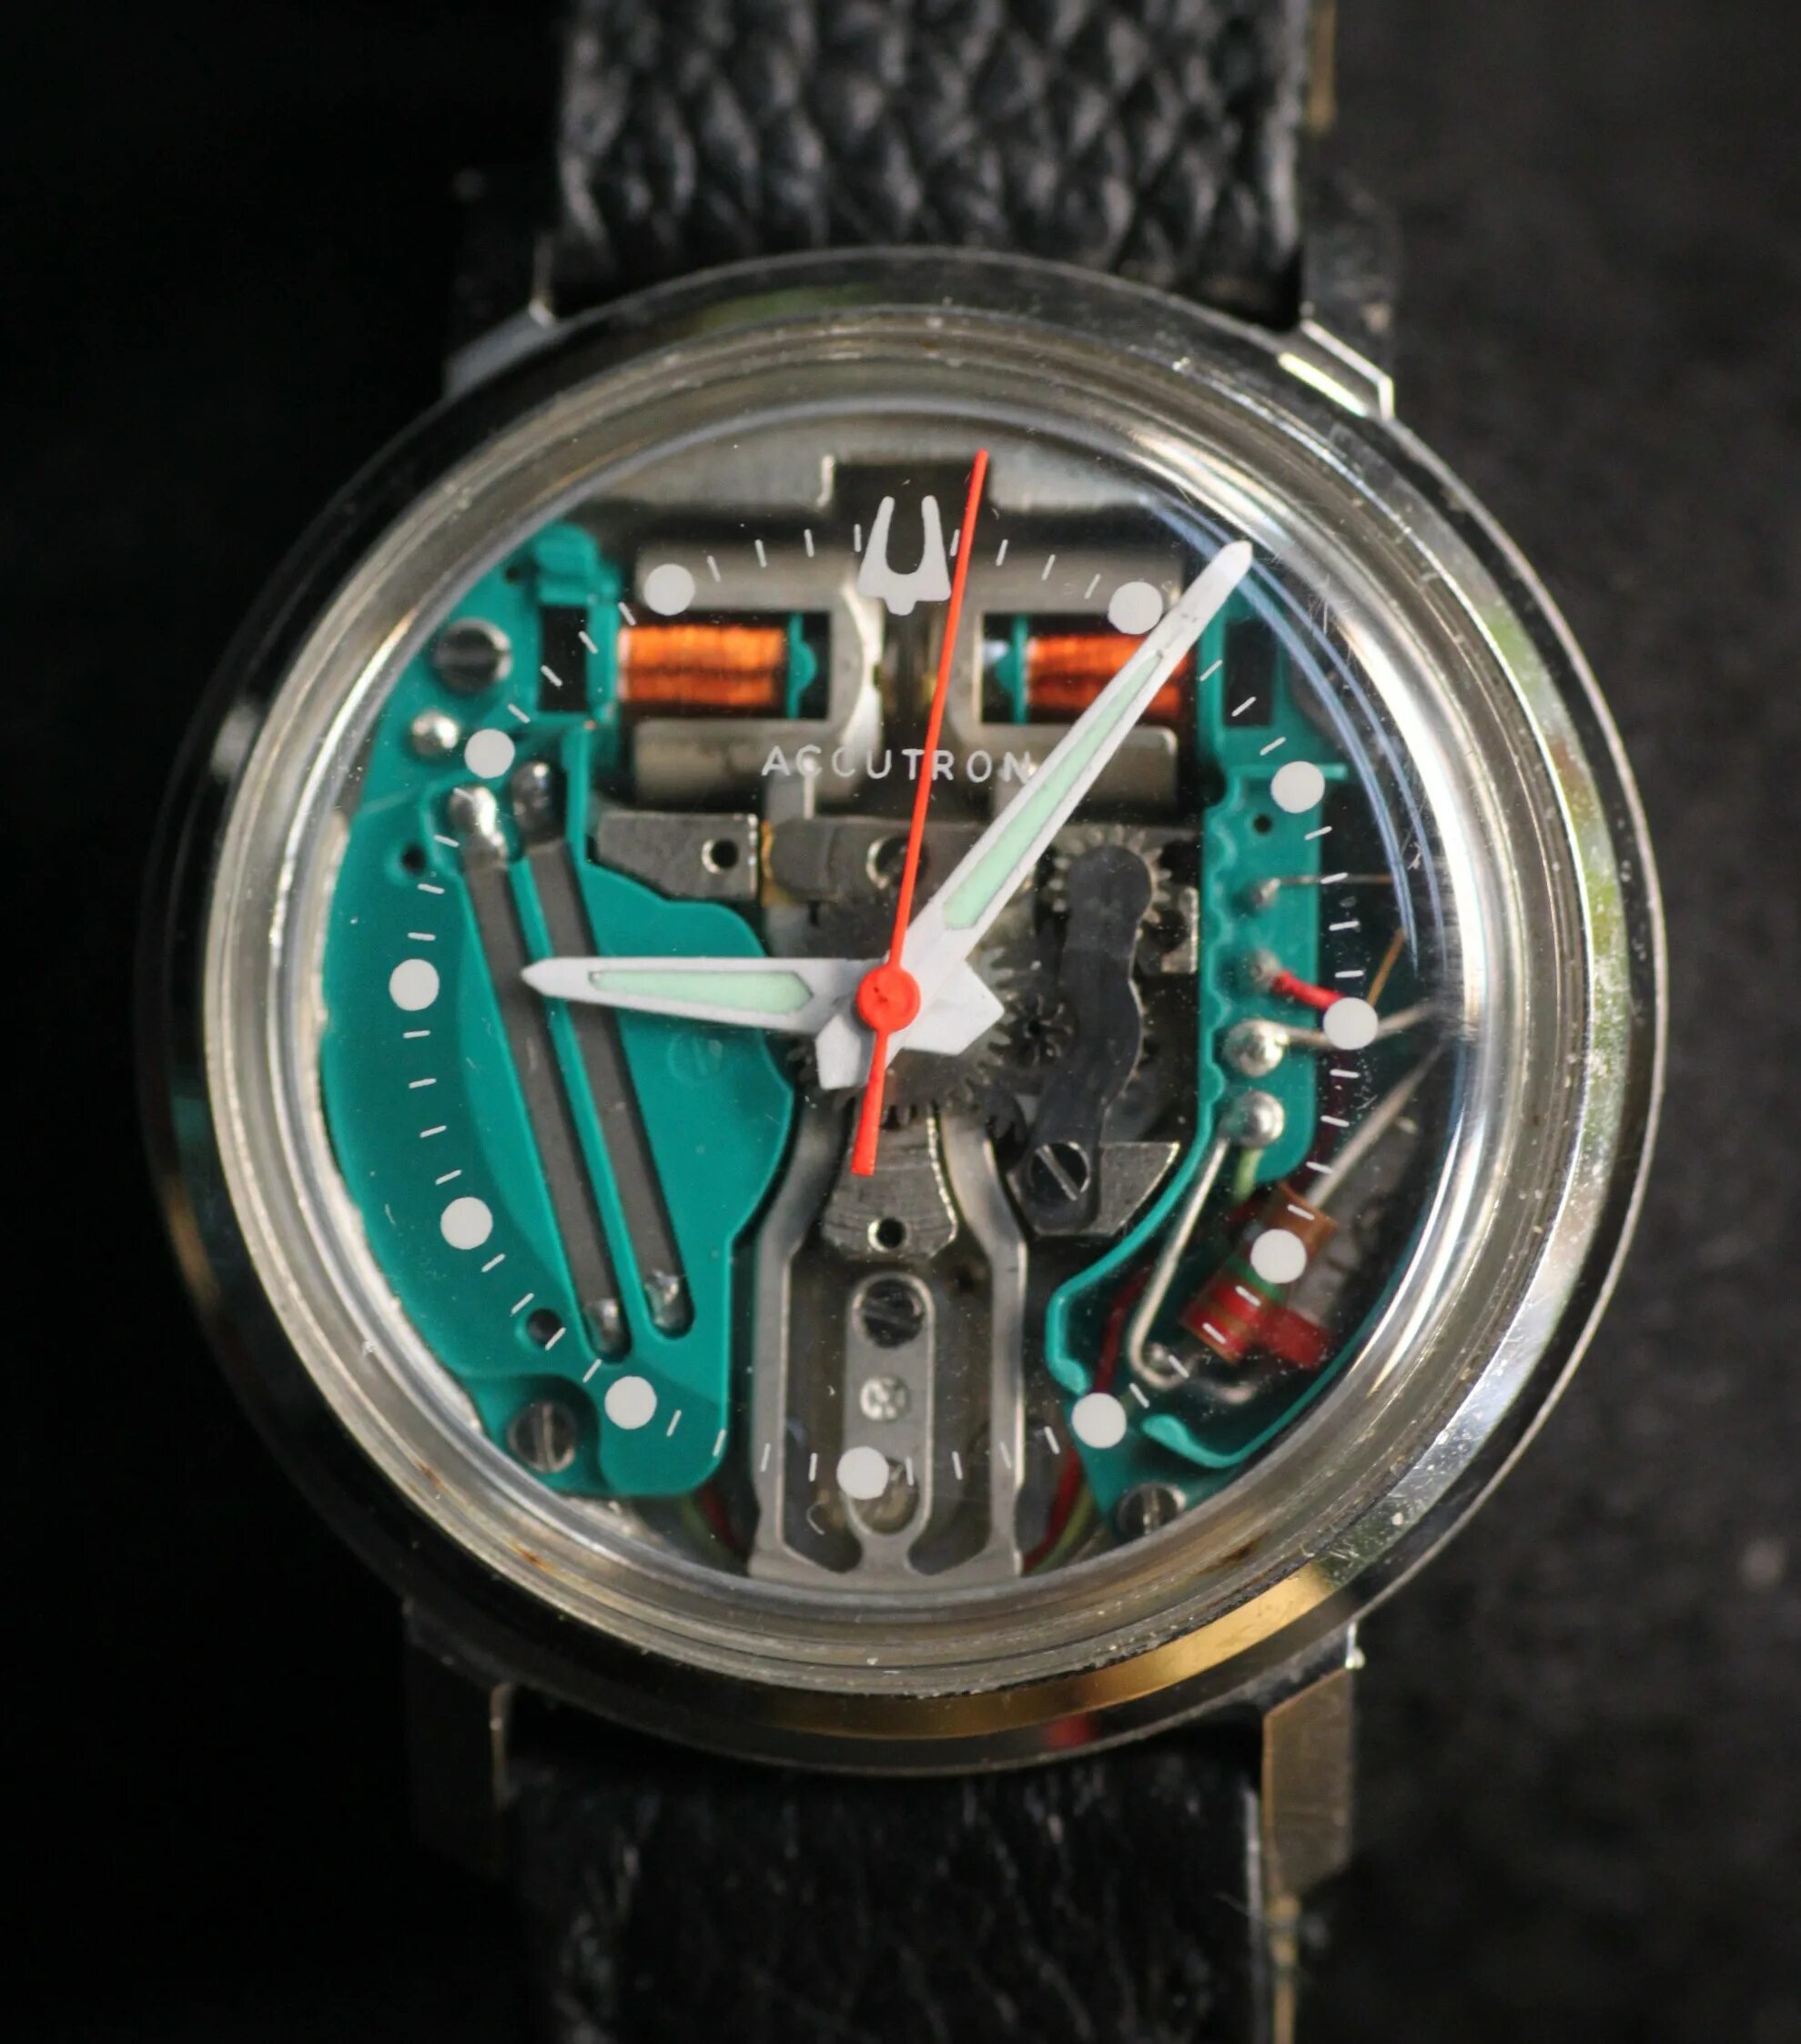 Watch tuning. Часы Bulova Accutron. Bulova Accutron 1960. Часы Булова камертонные. Bulova Spaceview 1967.